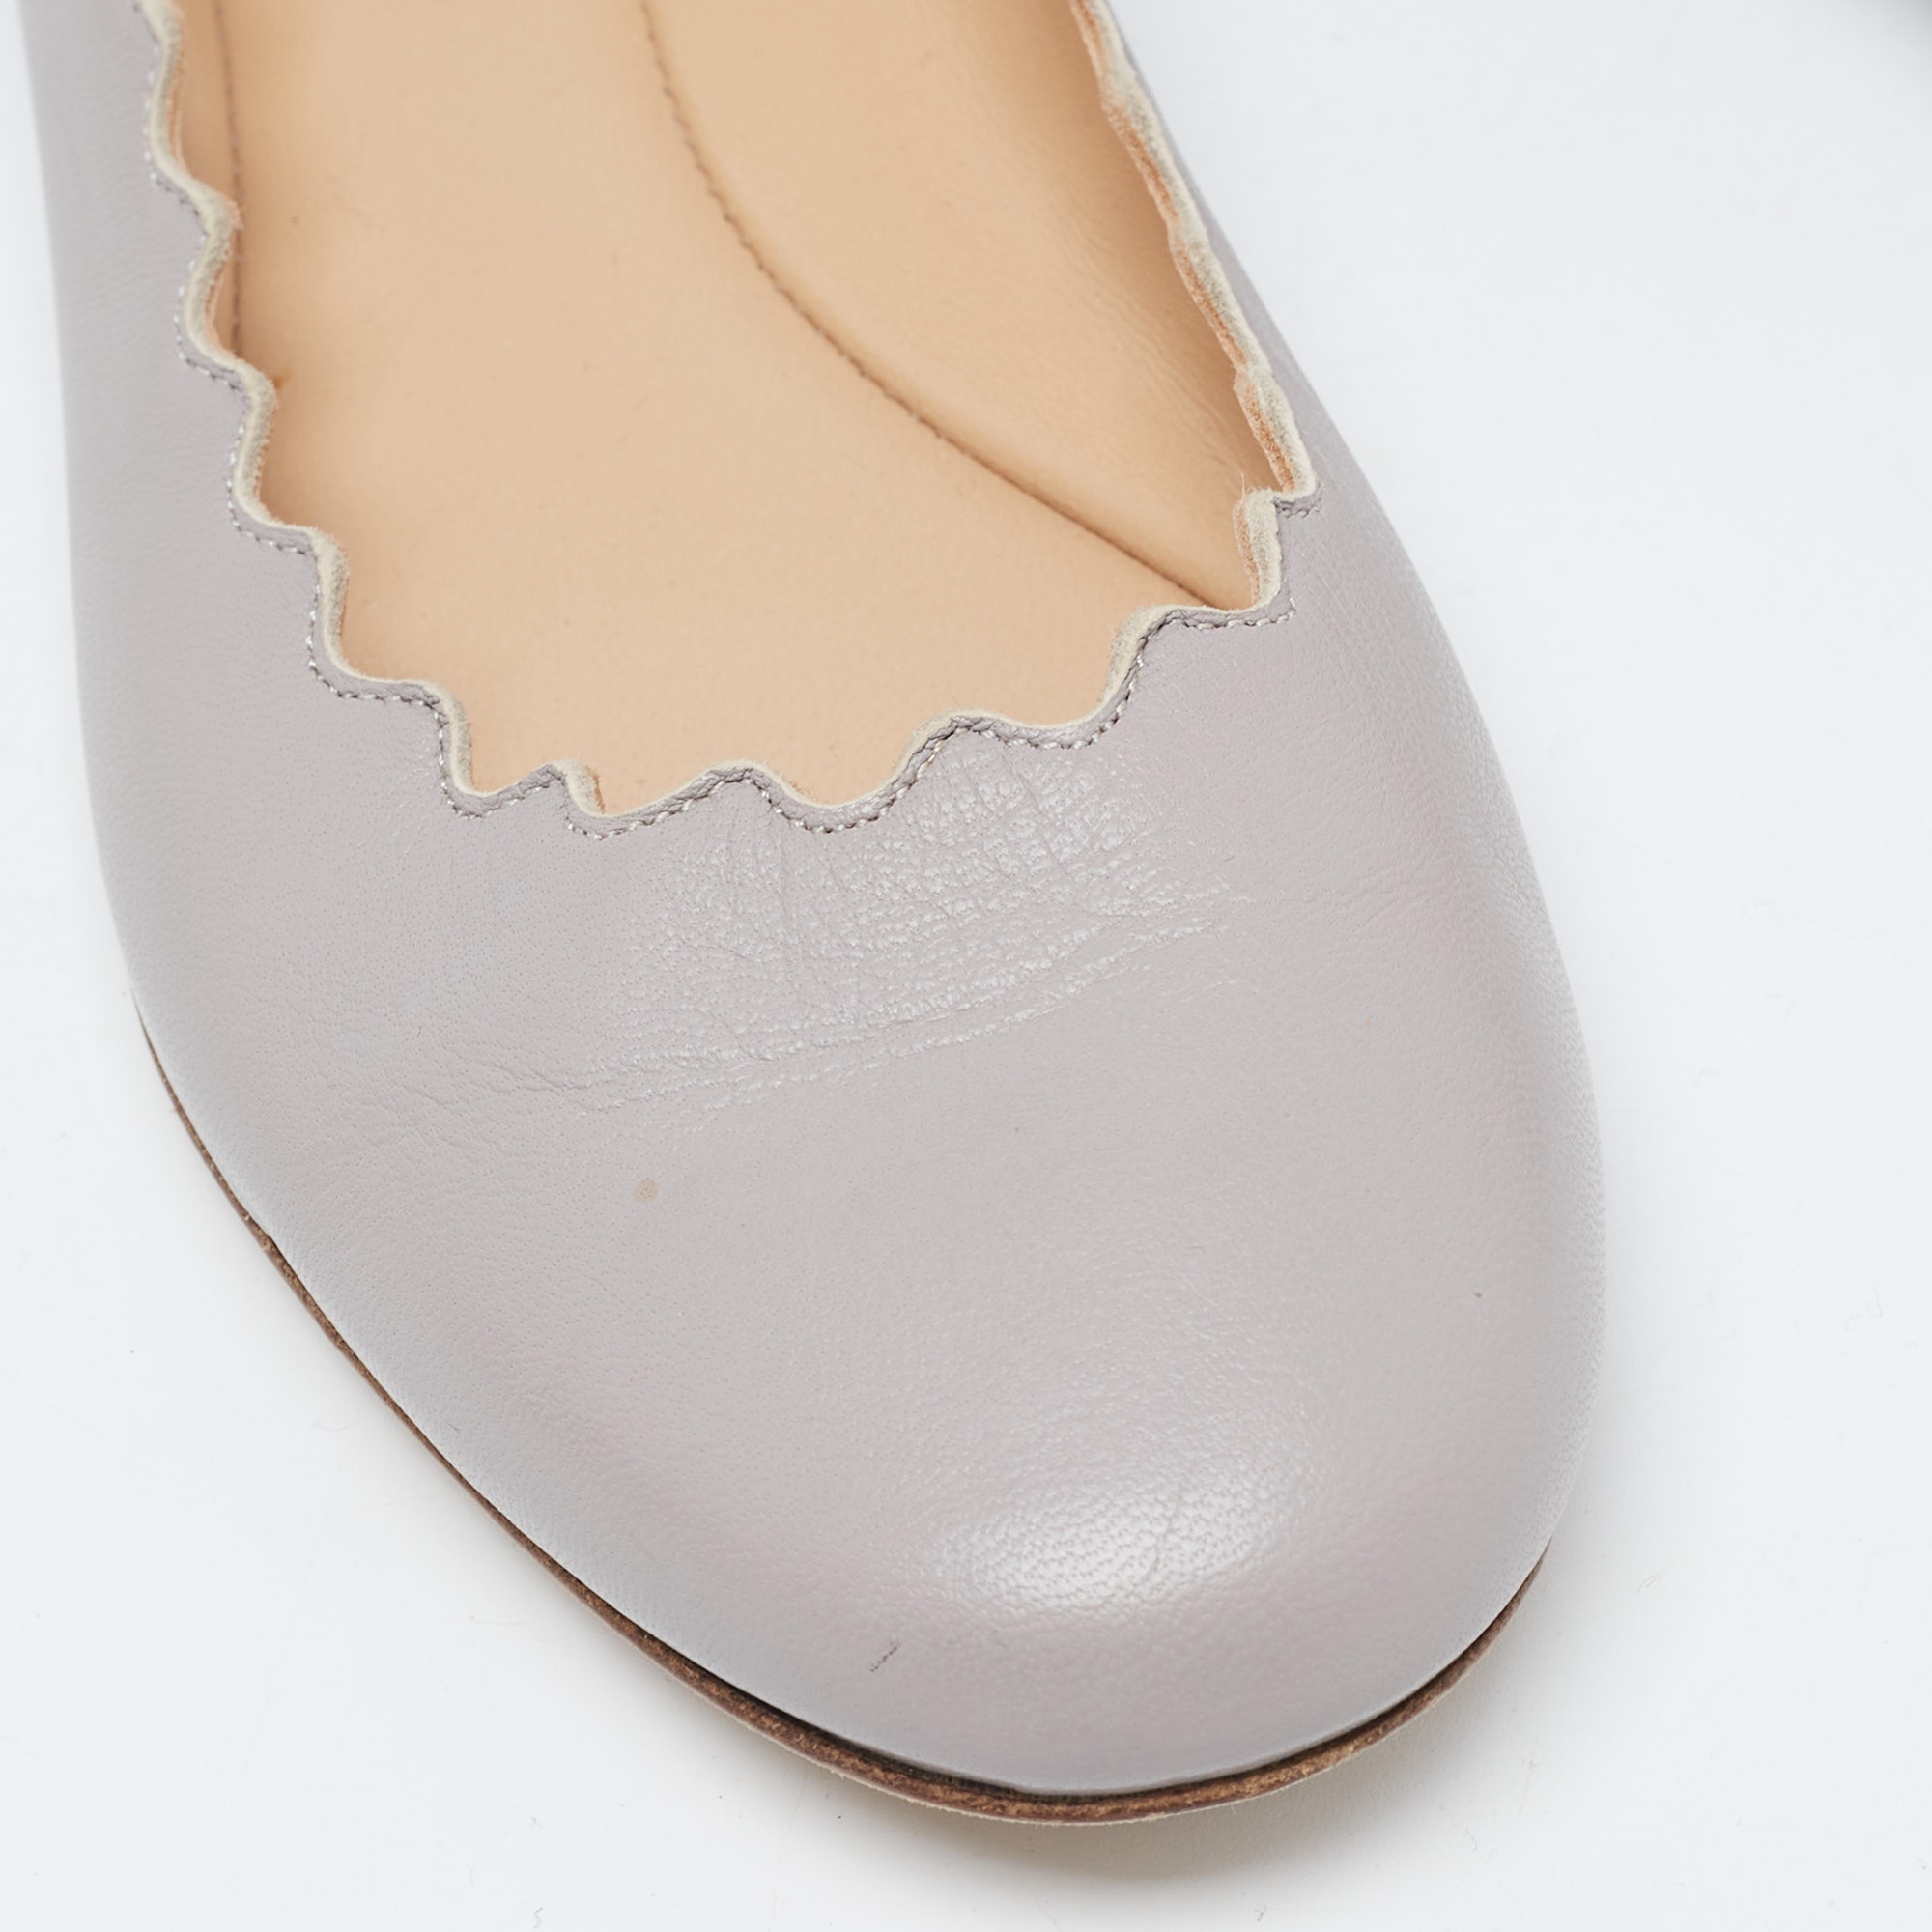 Chloe Grey Leather Ballet Flats Size 36